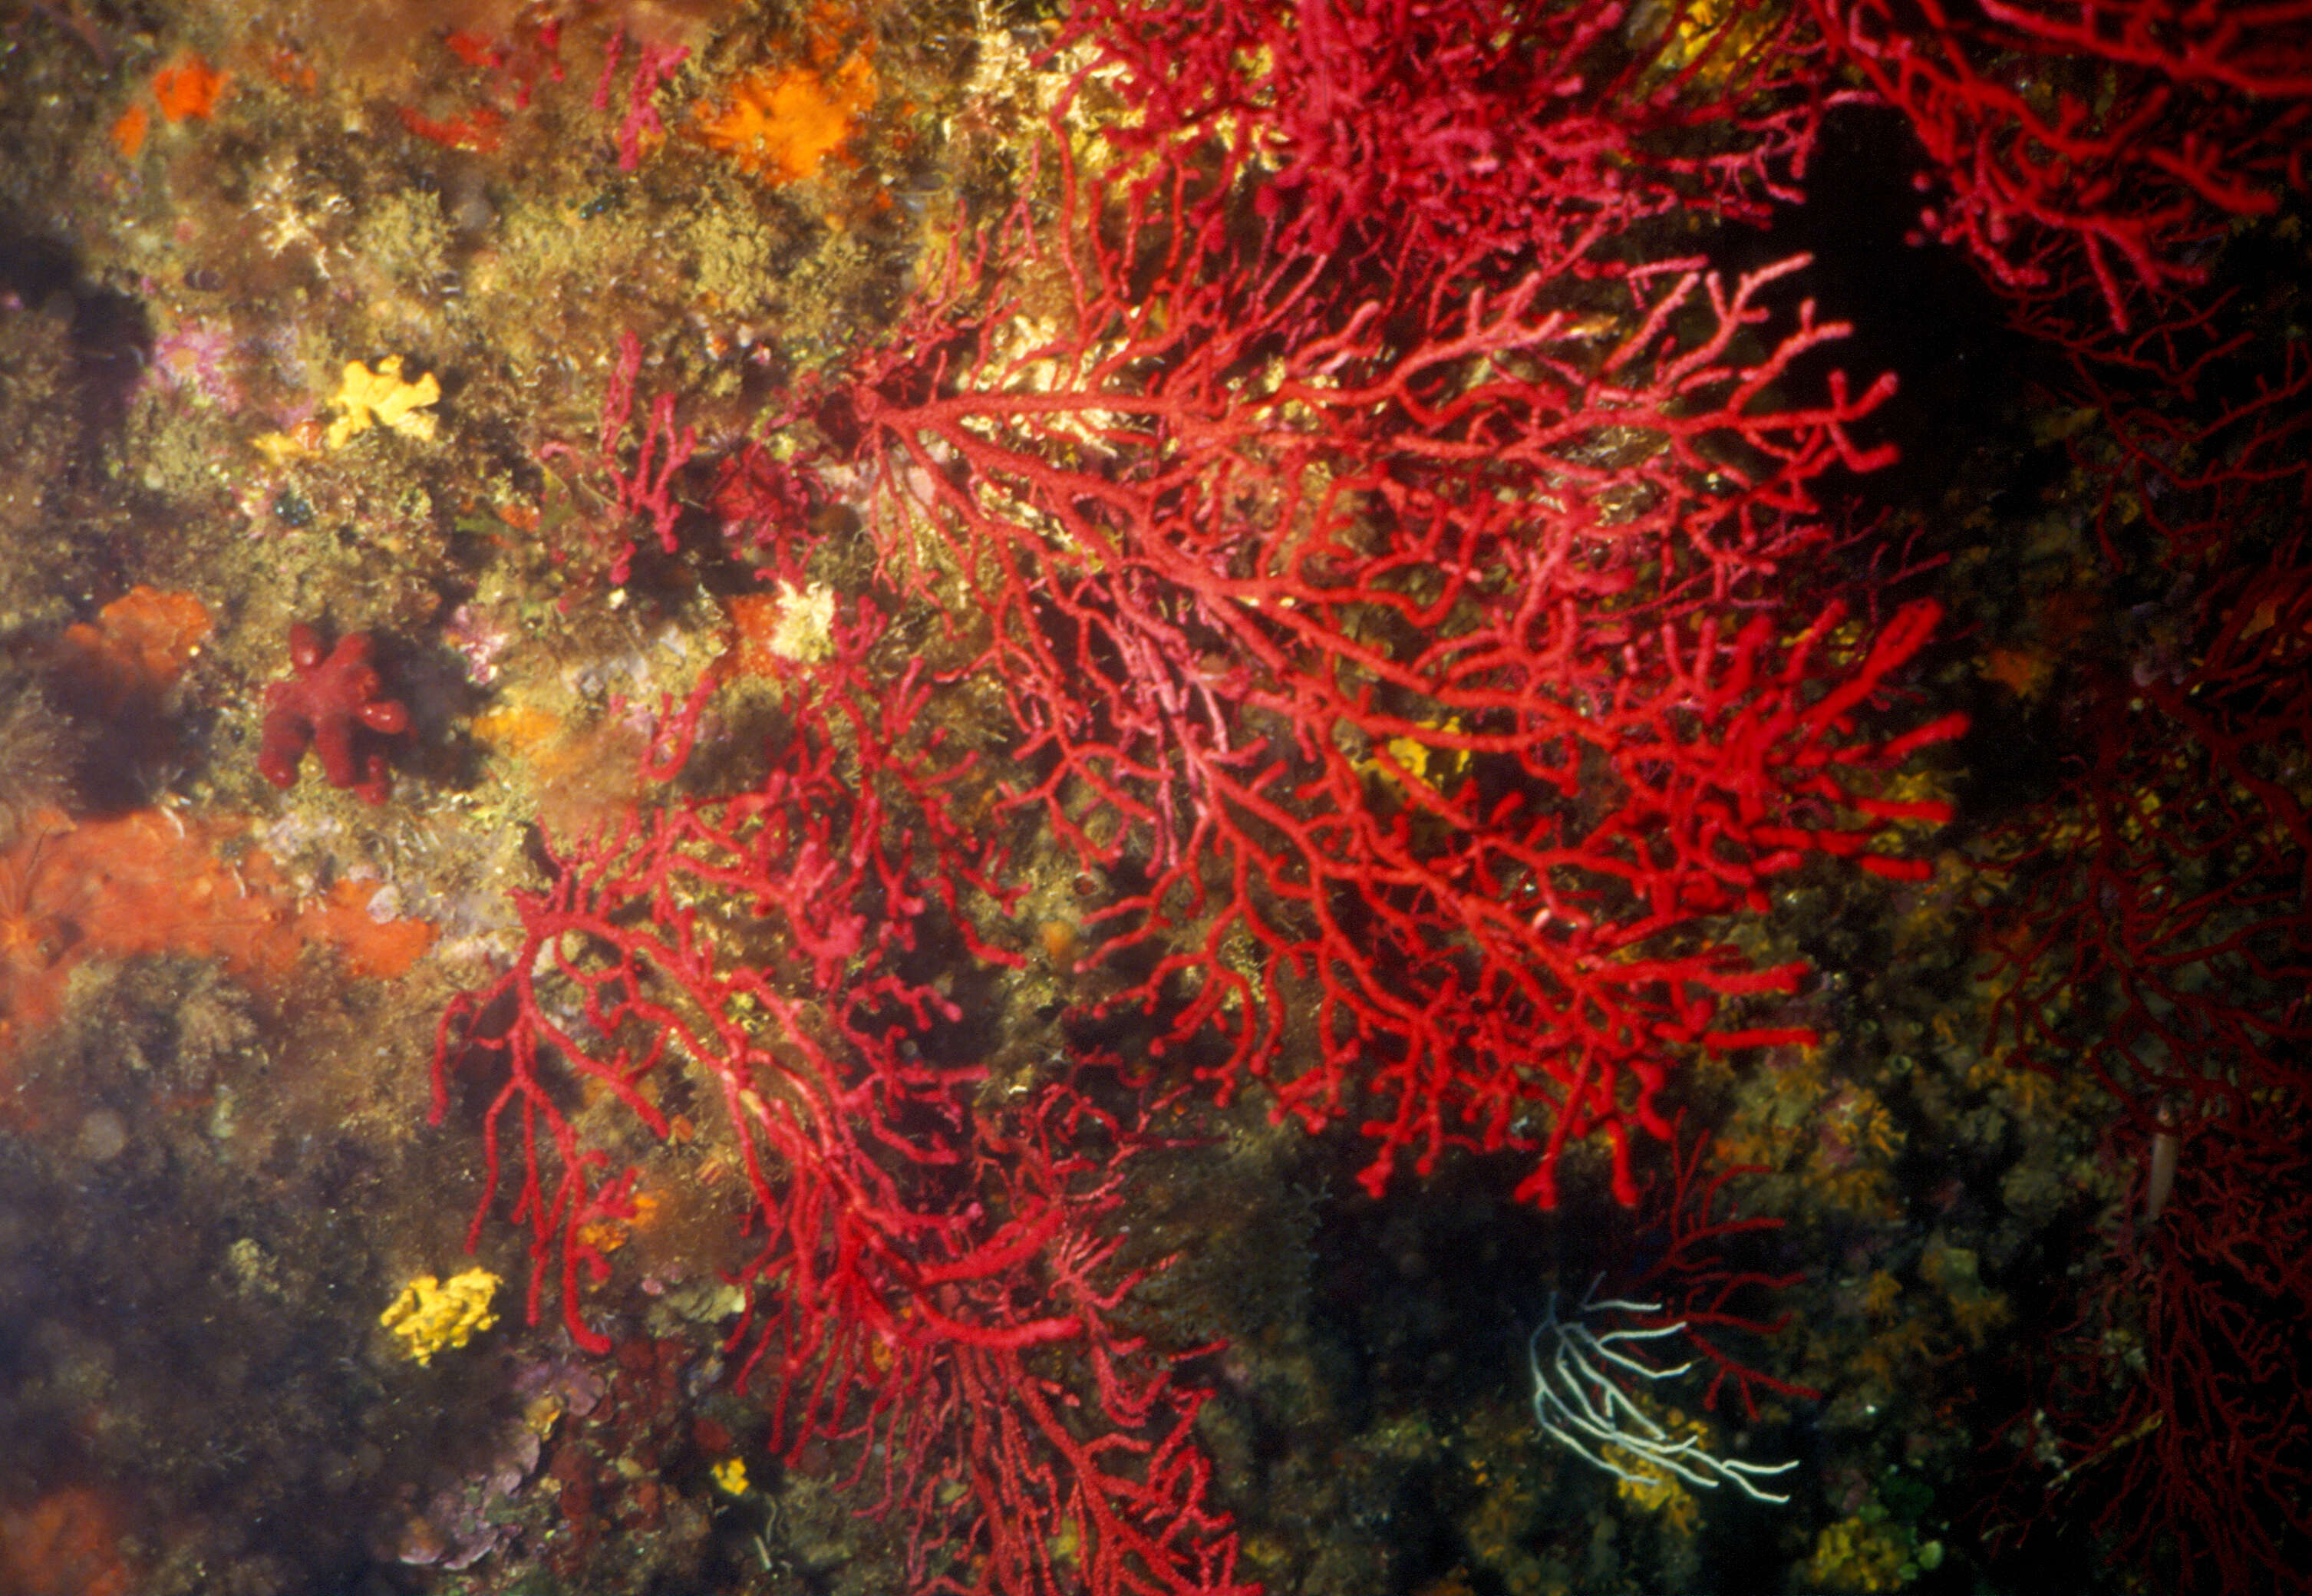 Image de gorgone multicolore